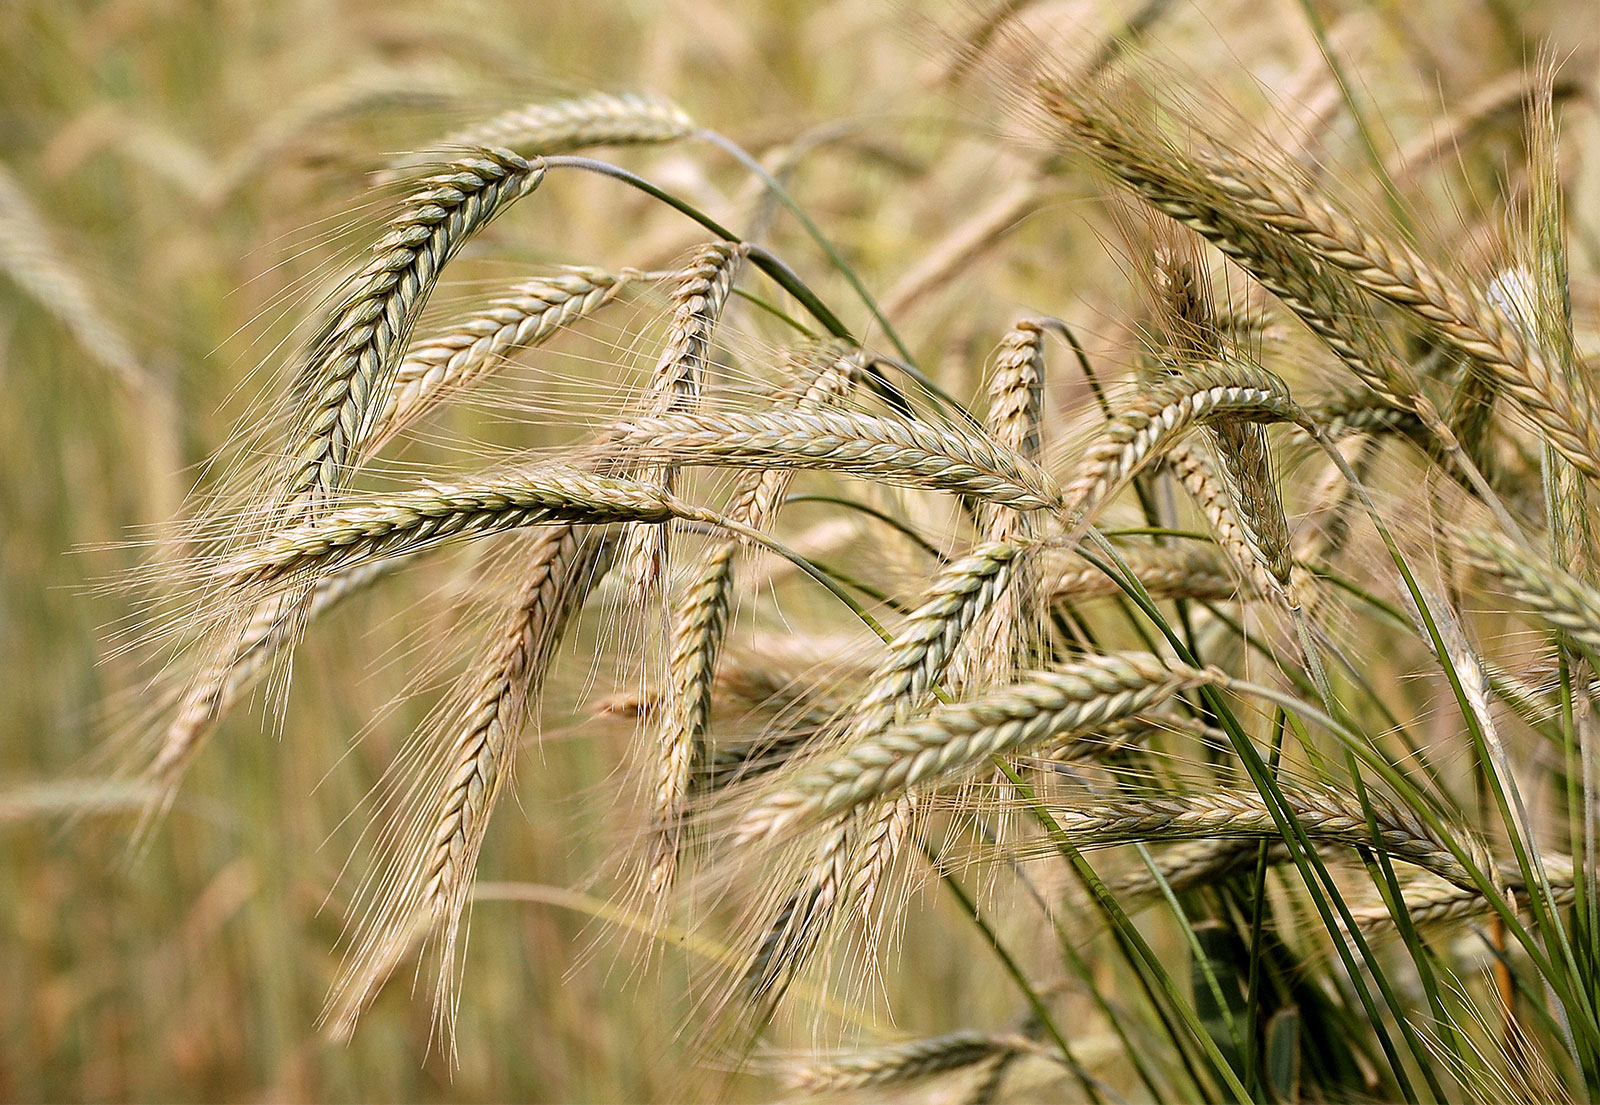 Argentine barley exports to China smash records amid Australia spat